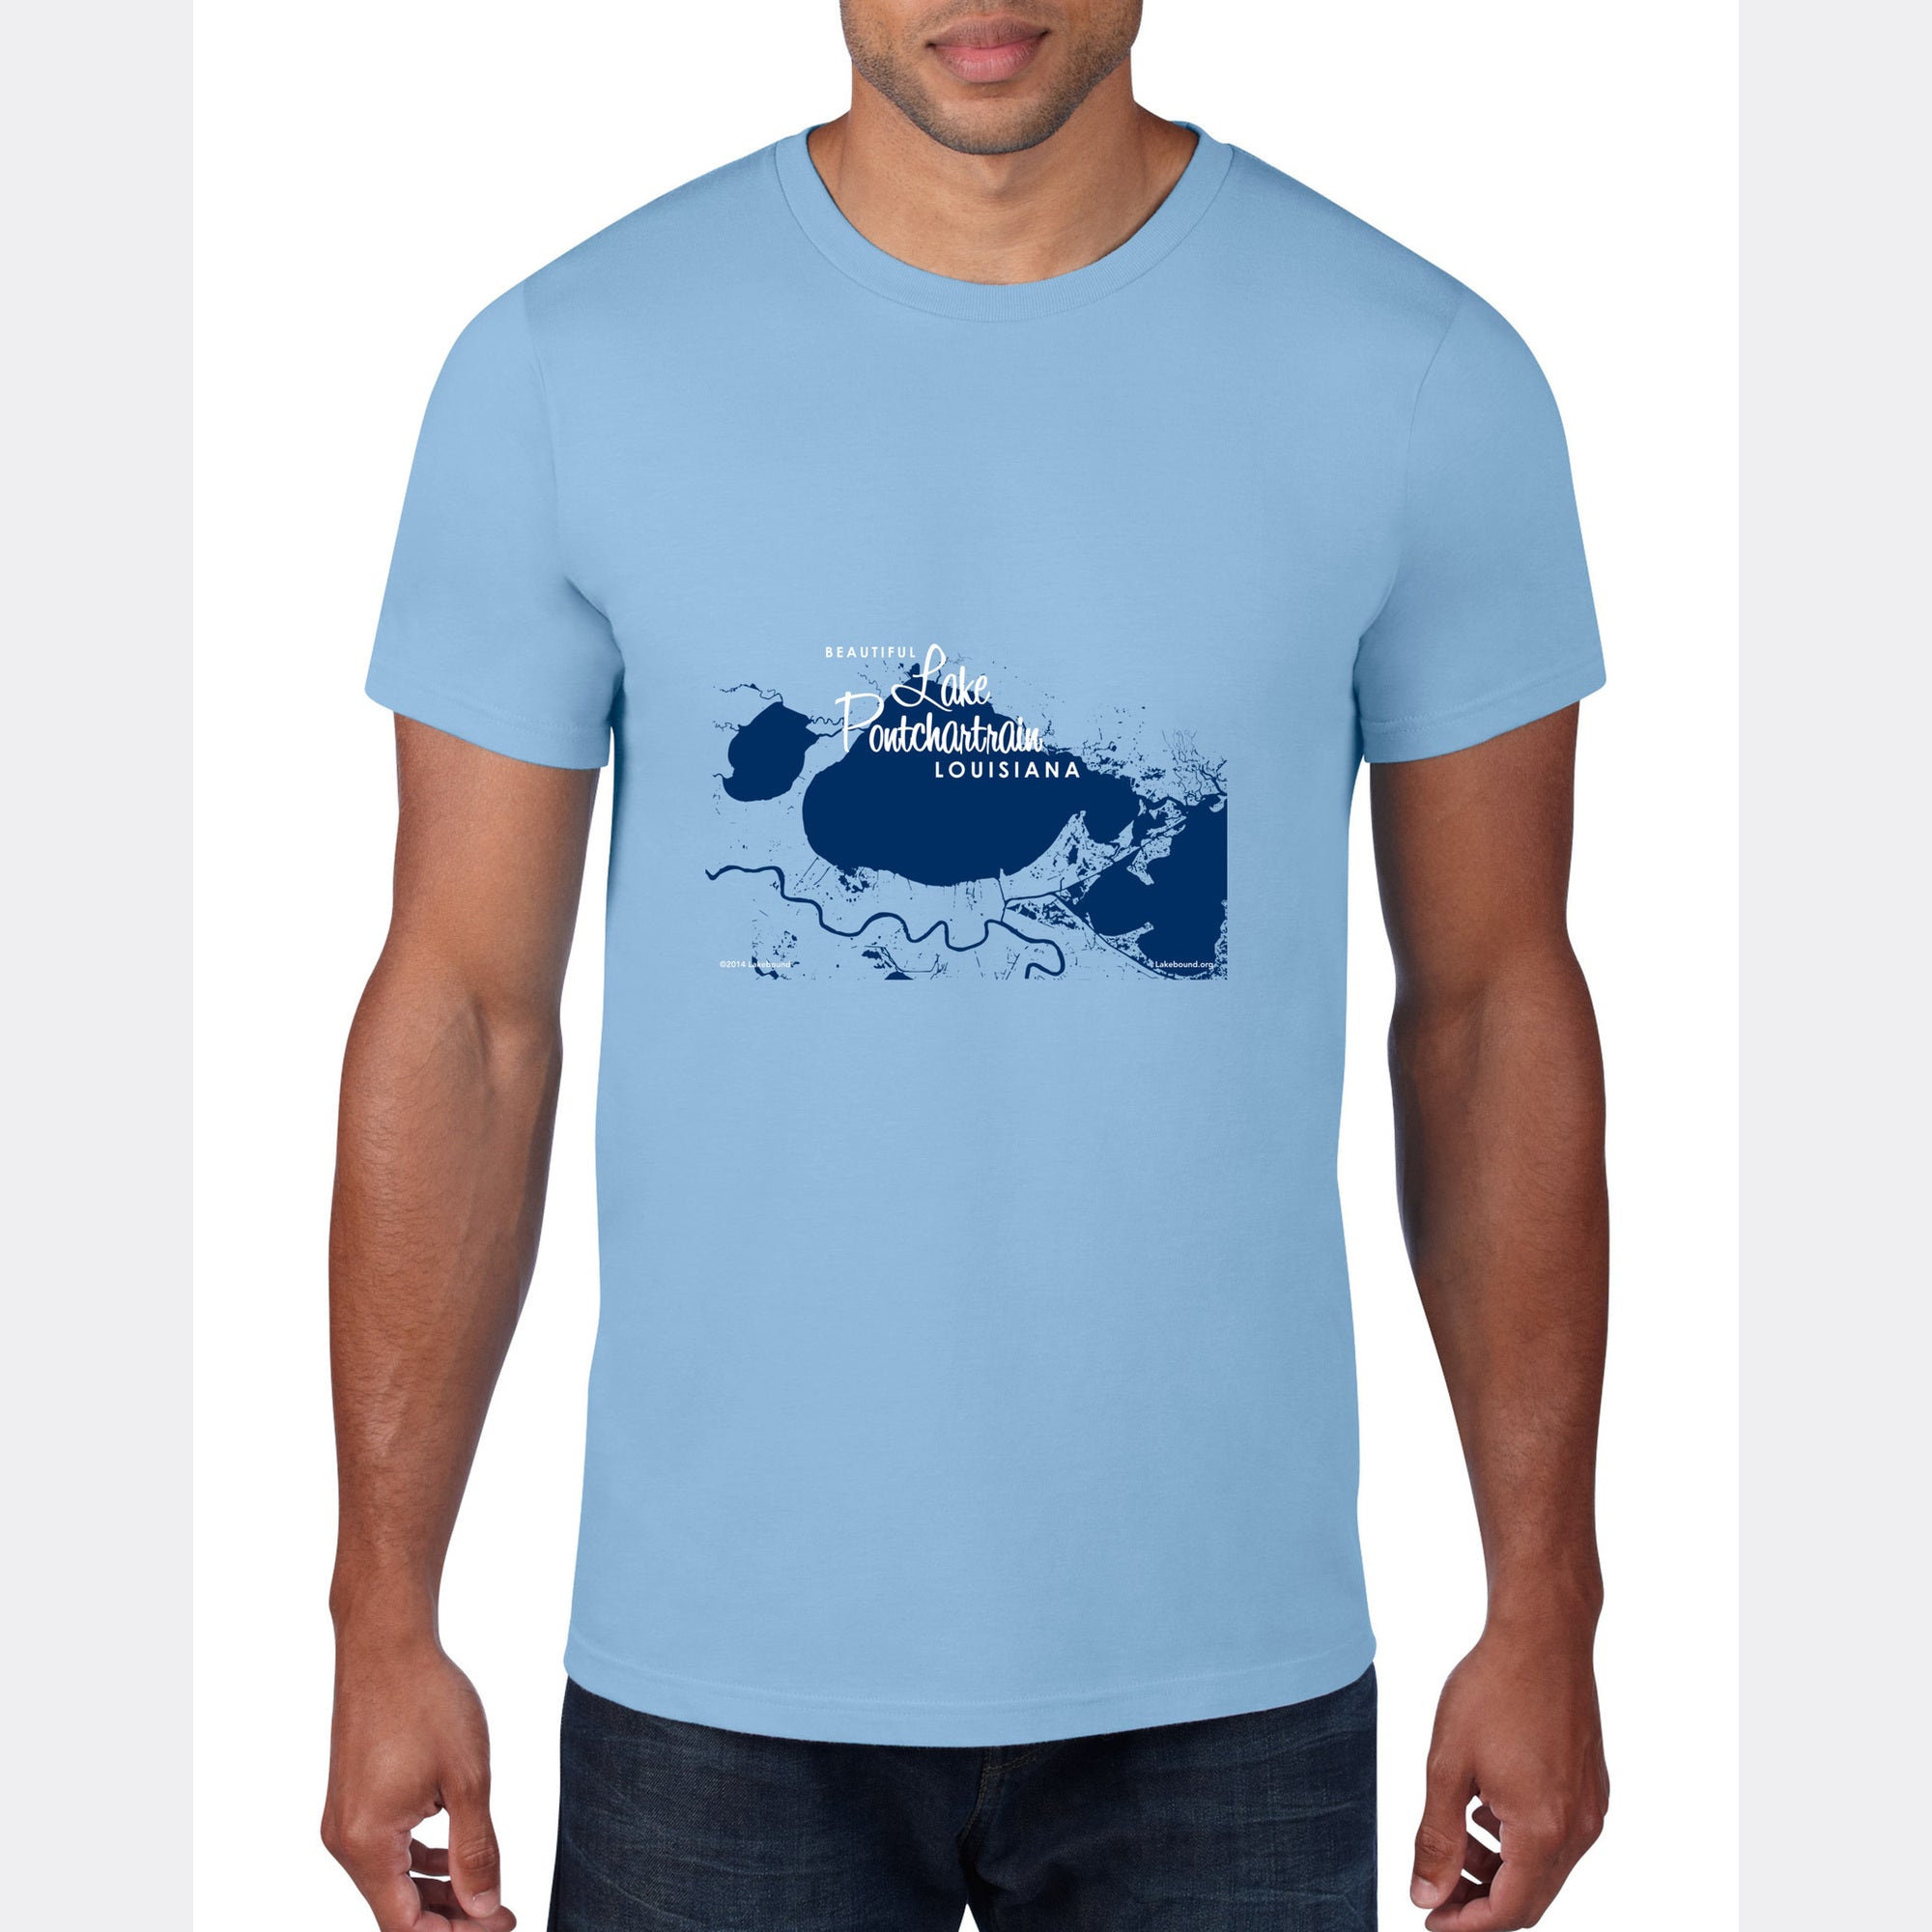 Lake Pontchartrain Louisiana, T-Shirt